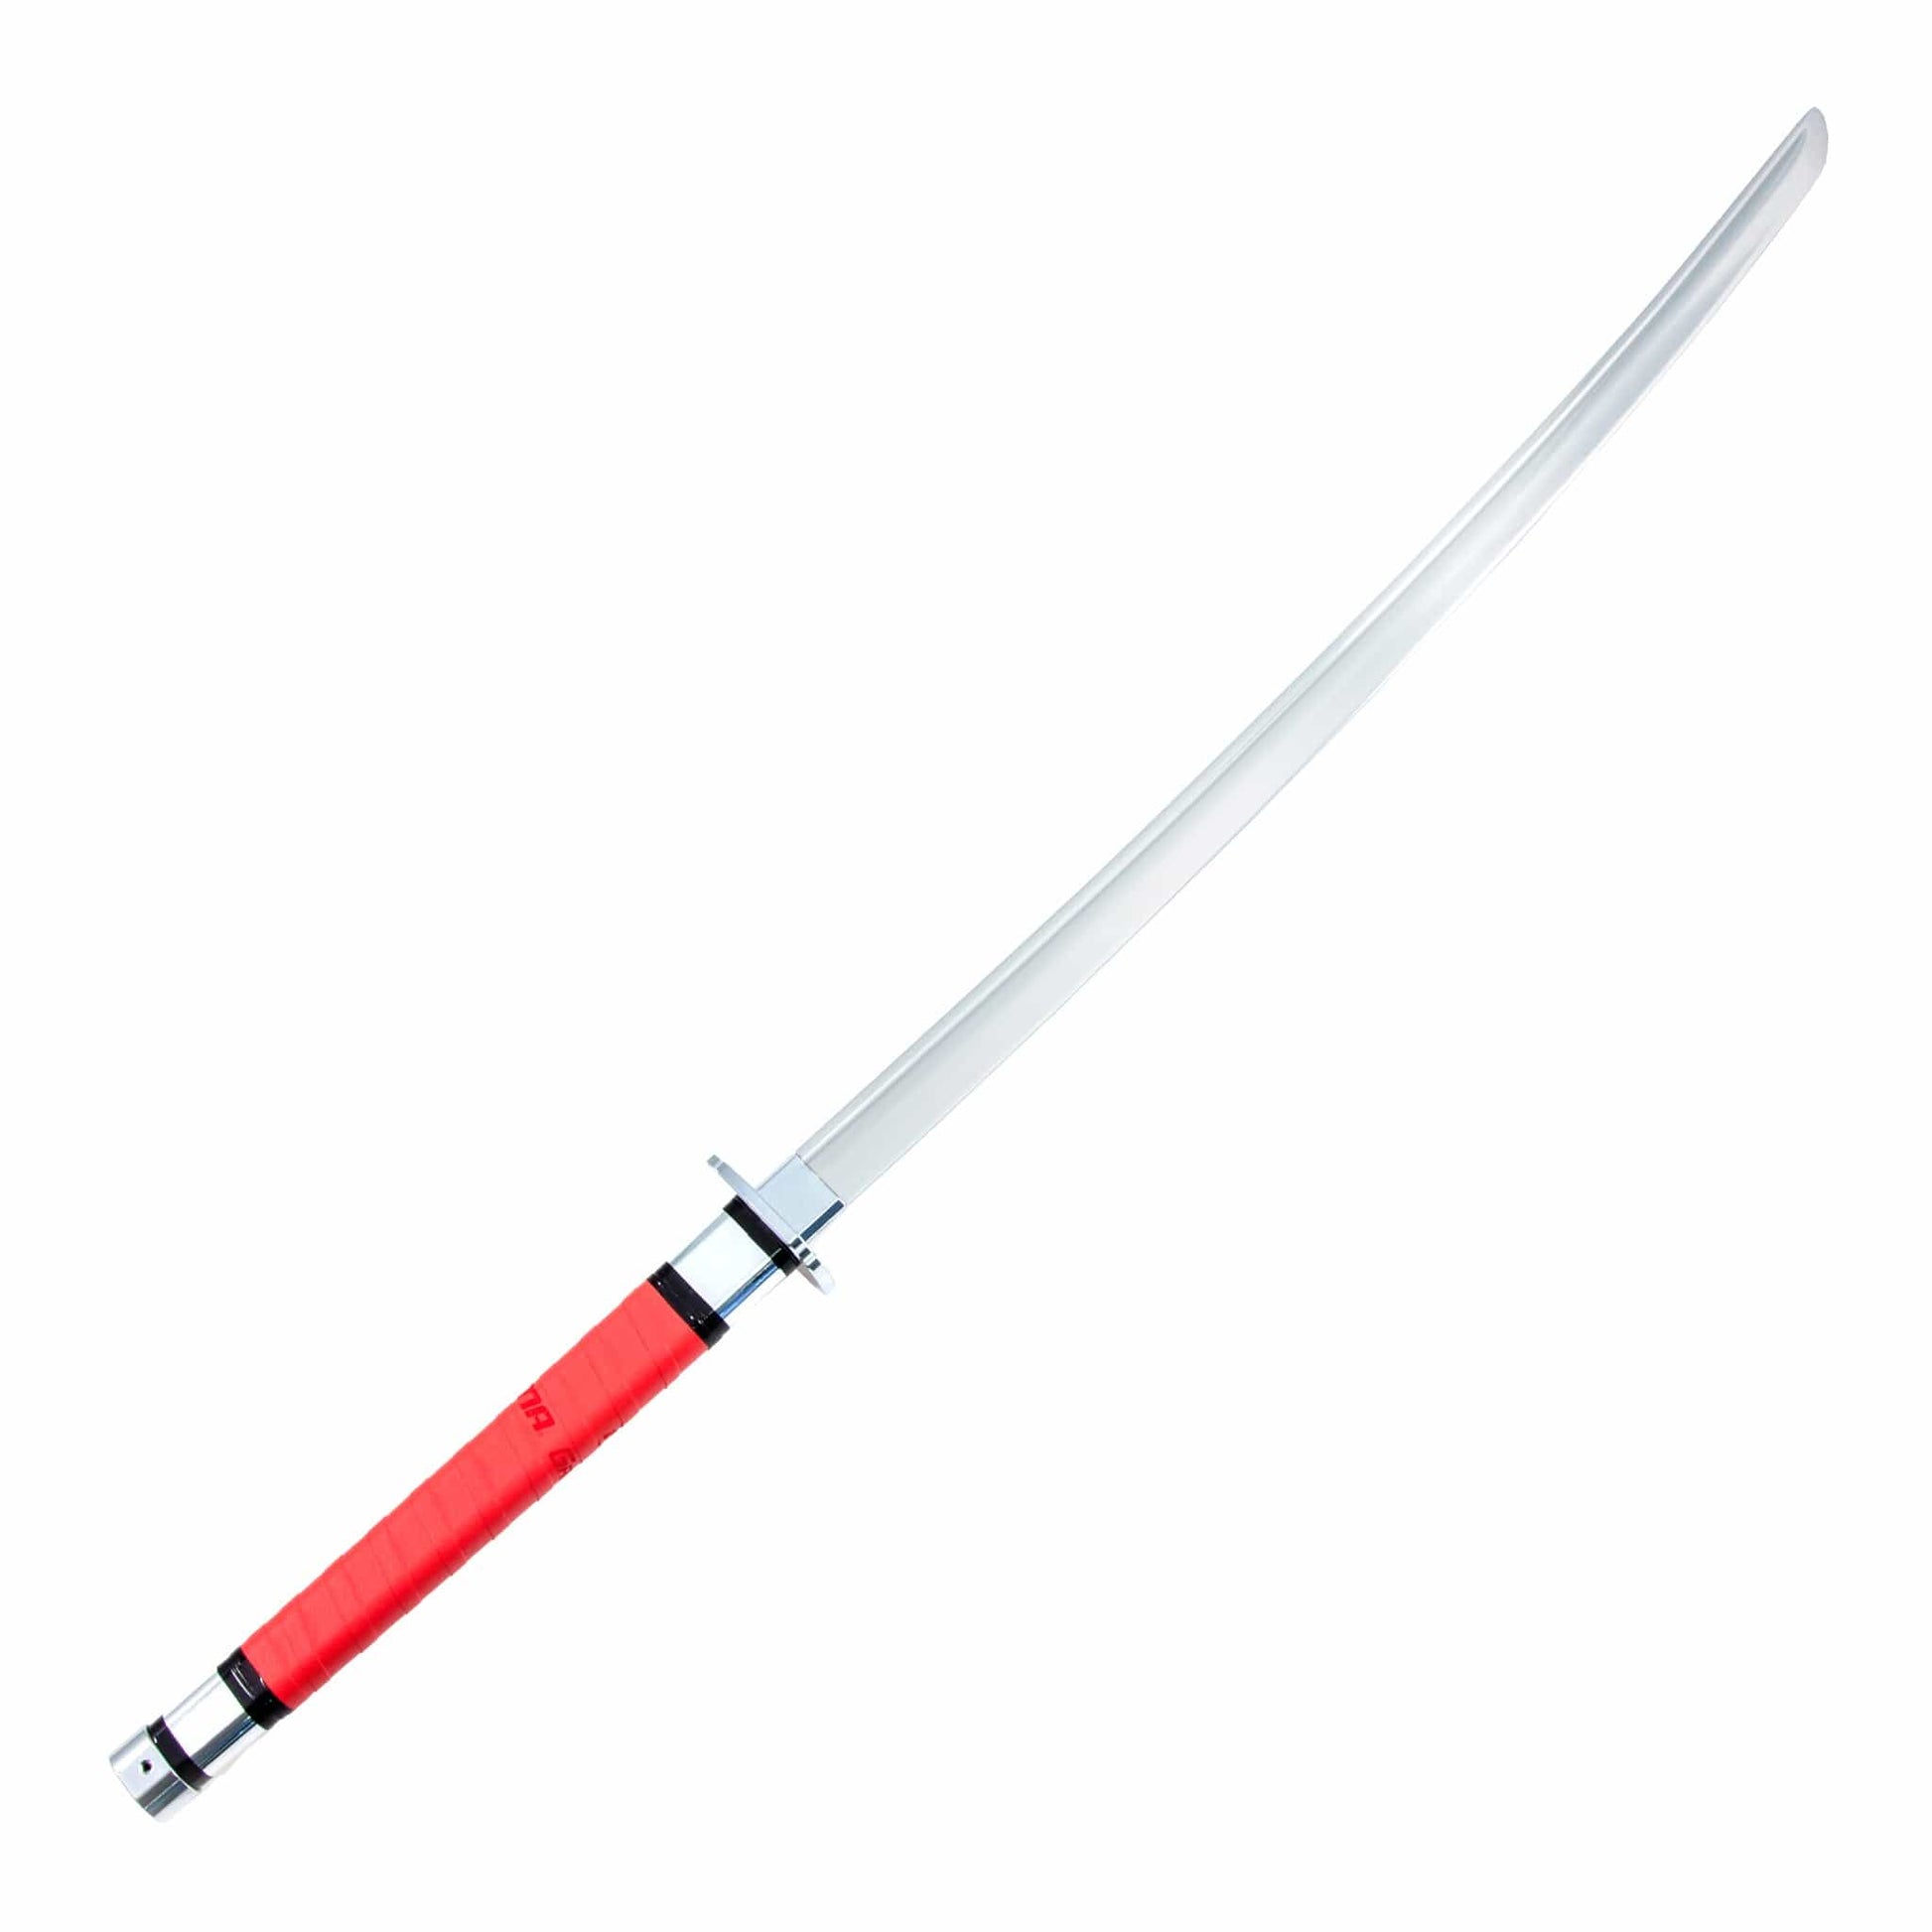 Eclipse Martial Art Supplies sporting goods red G-Force Demo Samurai Sword non-sharp Kata